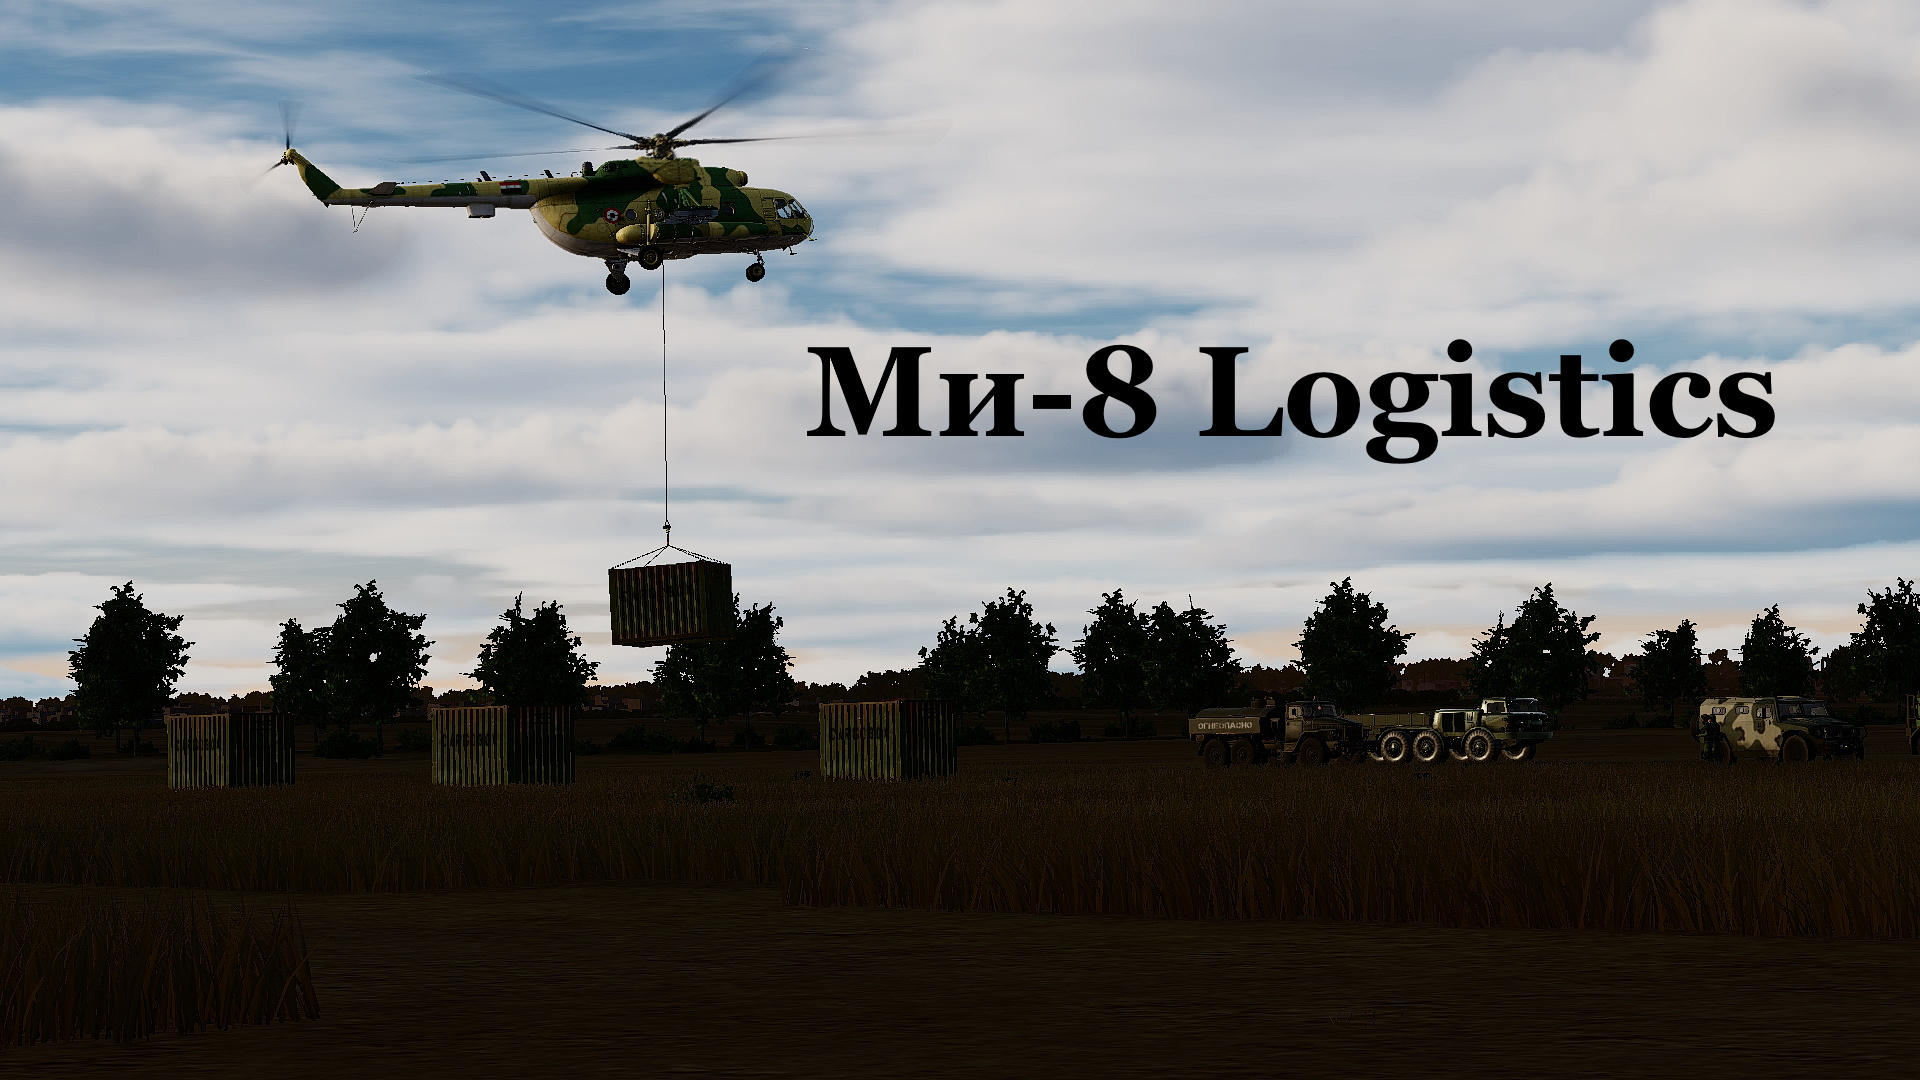 Skalmans Mi-8 Logistics Mission